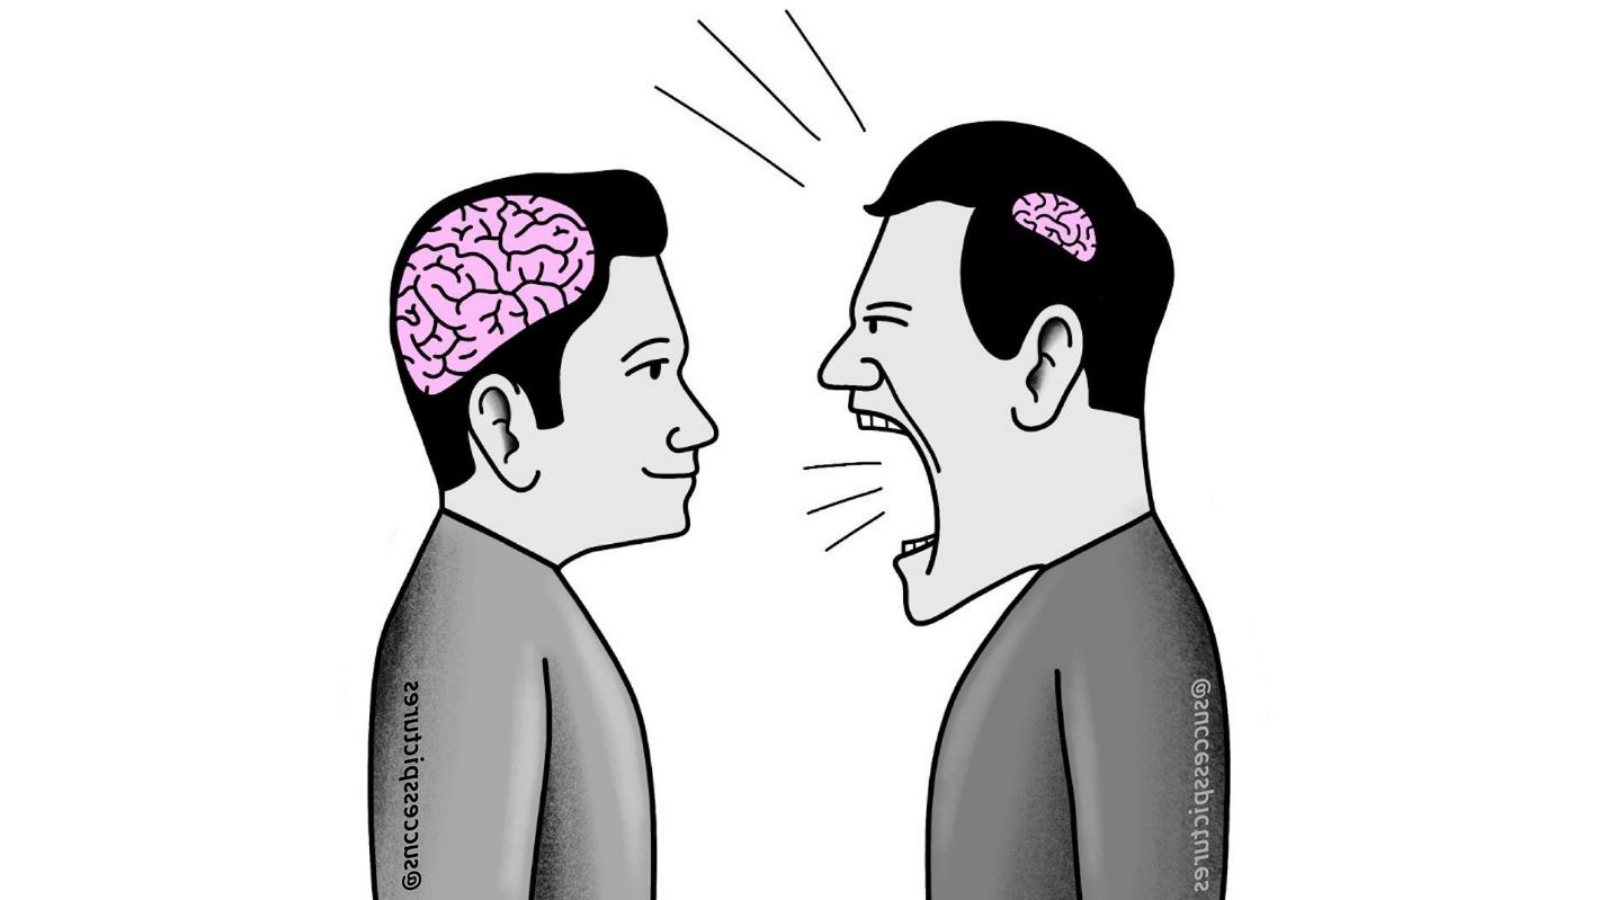 big-brain-vs-small-brain-blank-template-imgflip